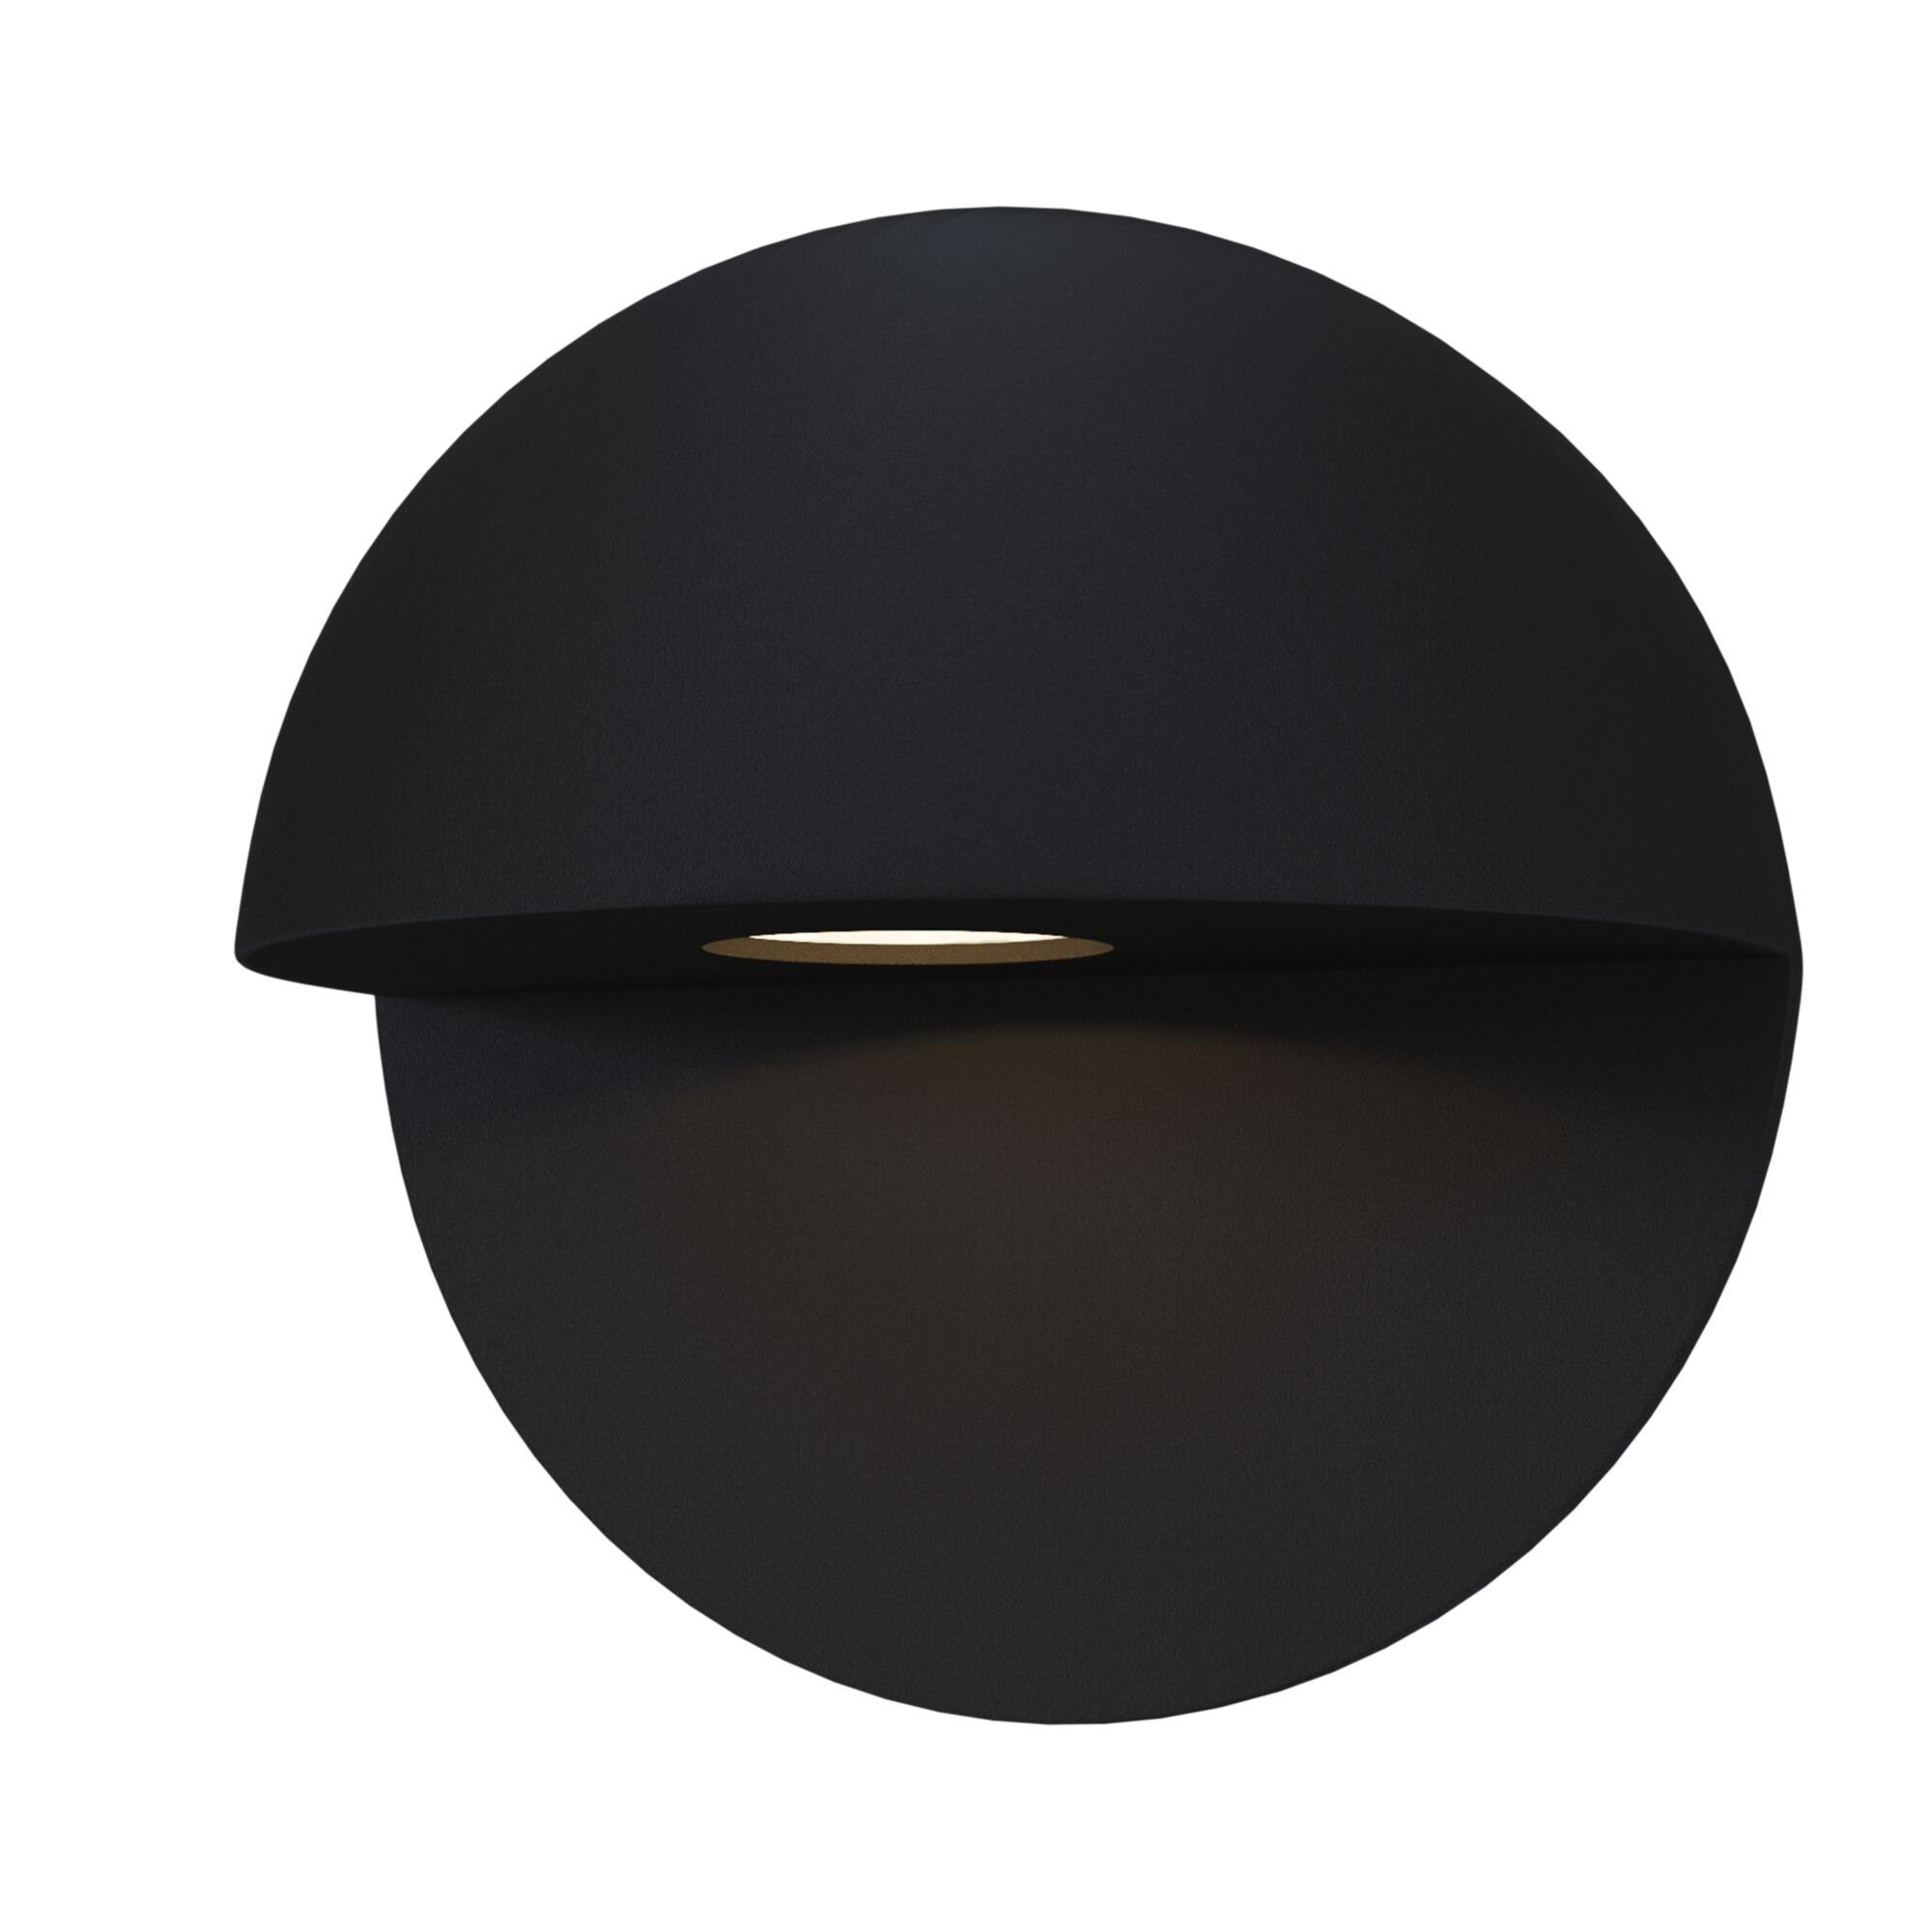 9x9x5.5 & hochwertige cm, fest Mezzo MAYTONI Wandleuchte Design DECORATIVE LIGHTING Lampe 1 Raumobjekt dekoratives integriert, LED